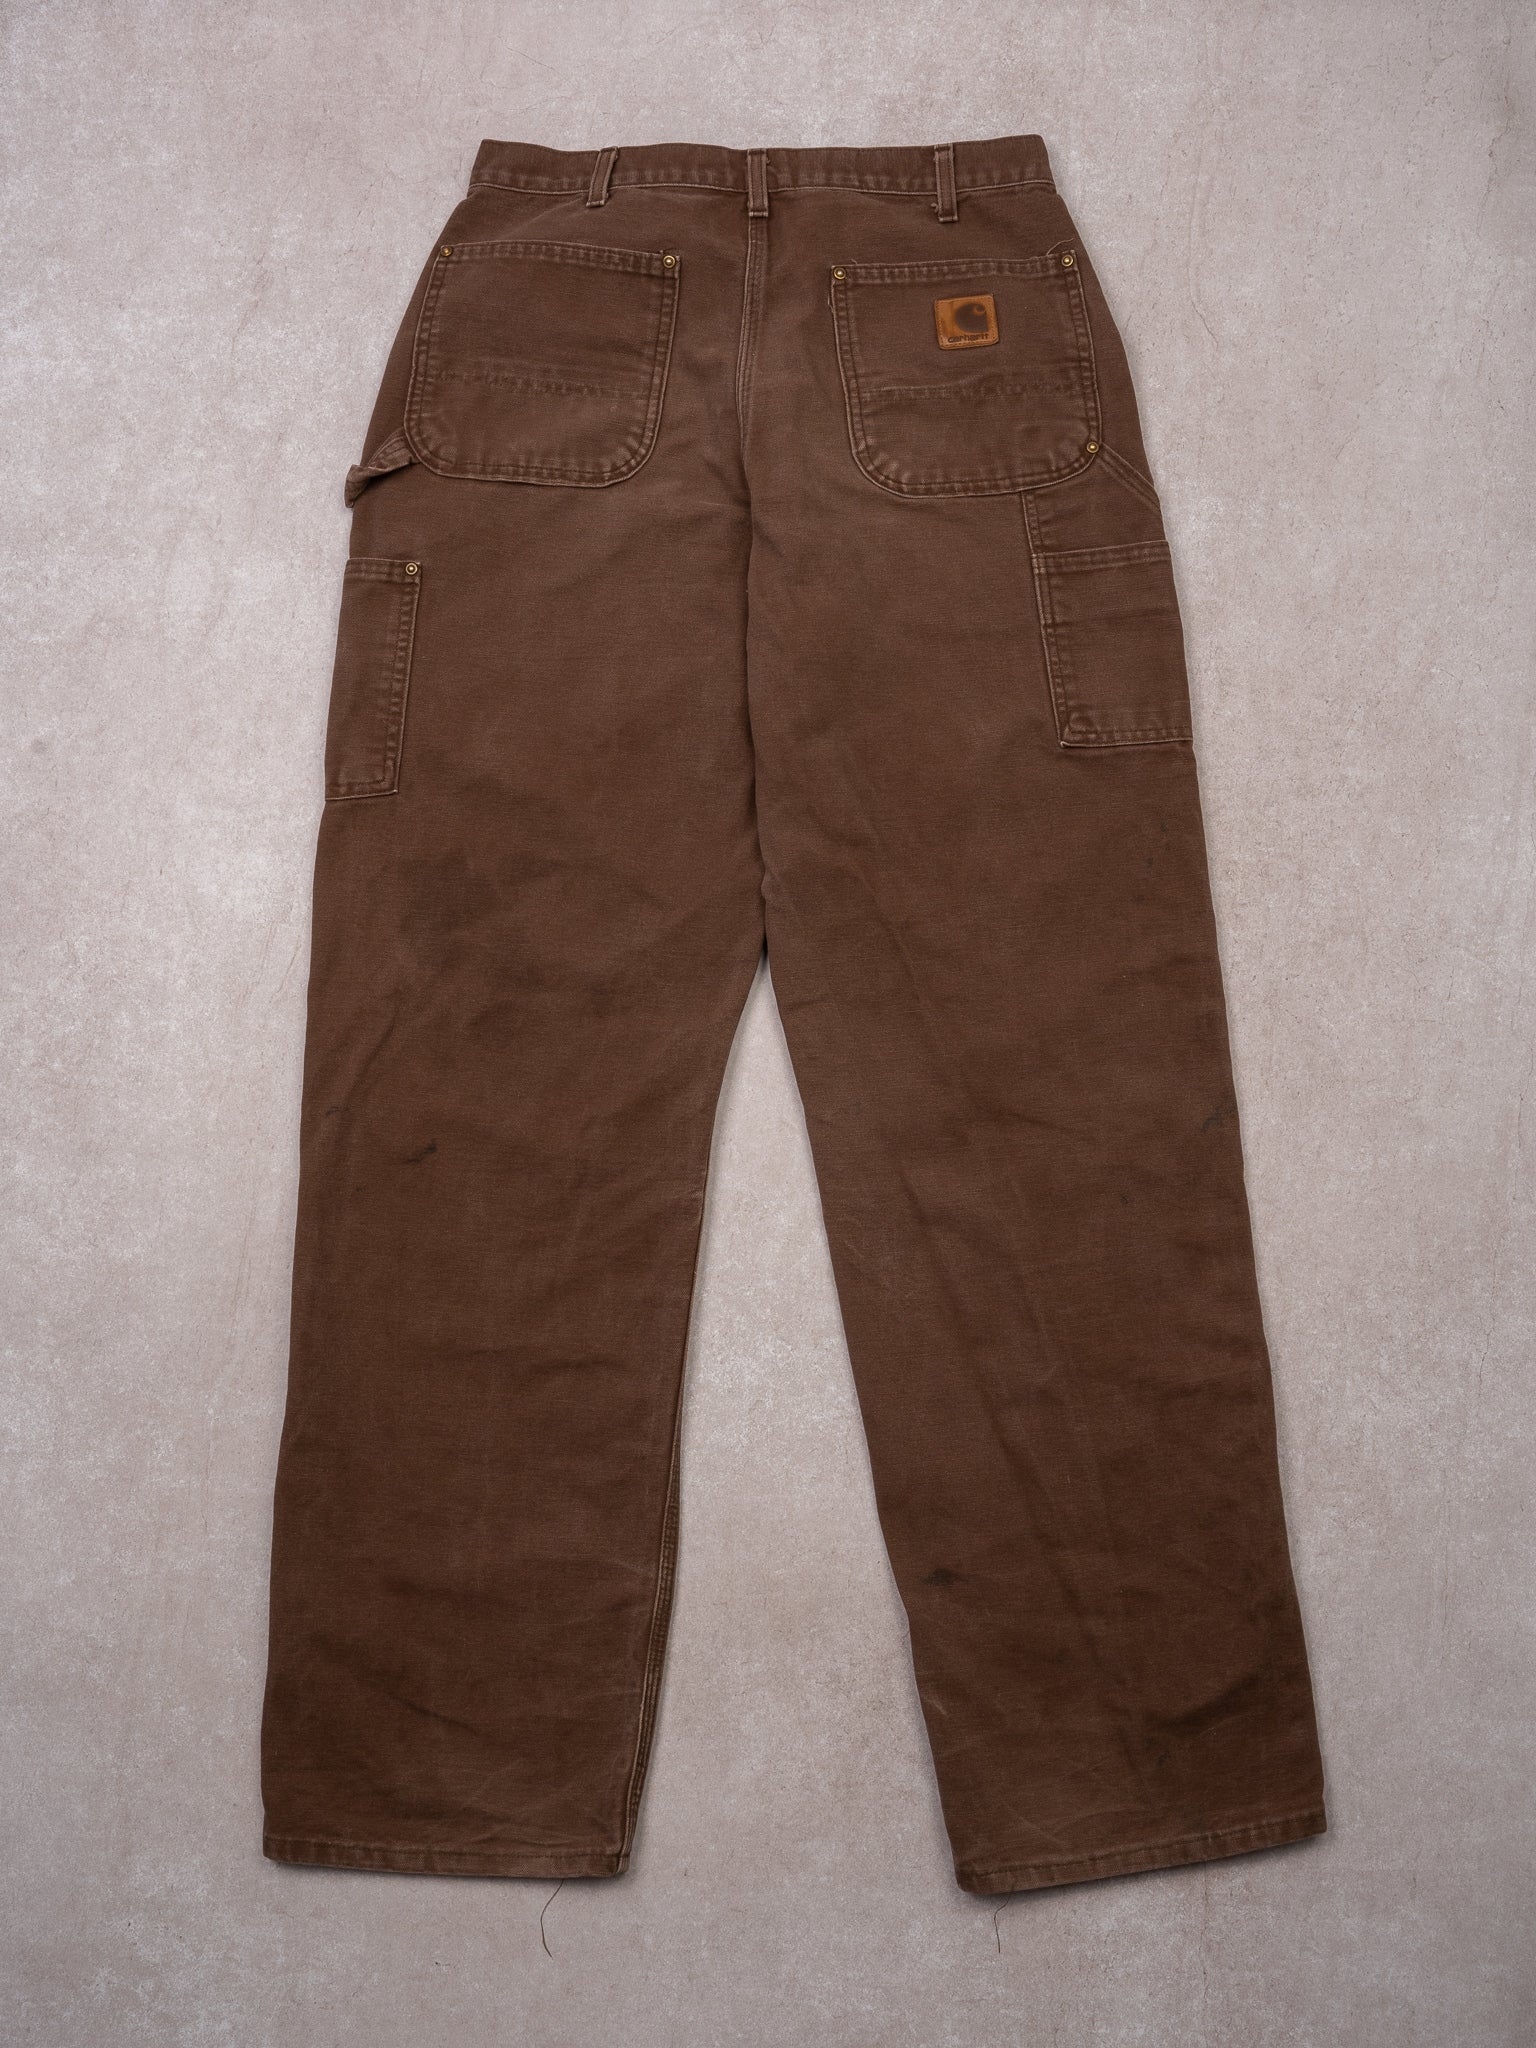 Vintage 90s Brown Double Knee Cargo Pants (32 x 34)